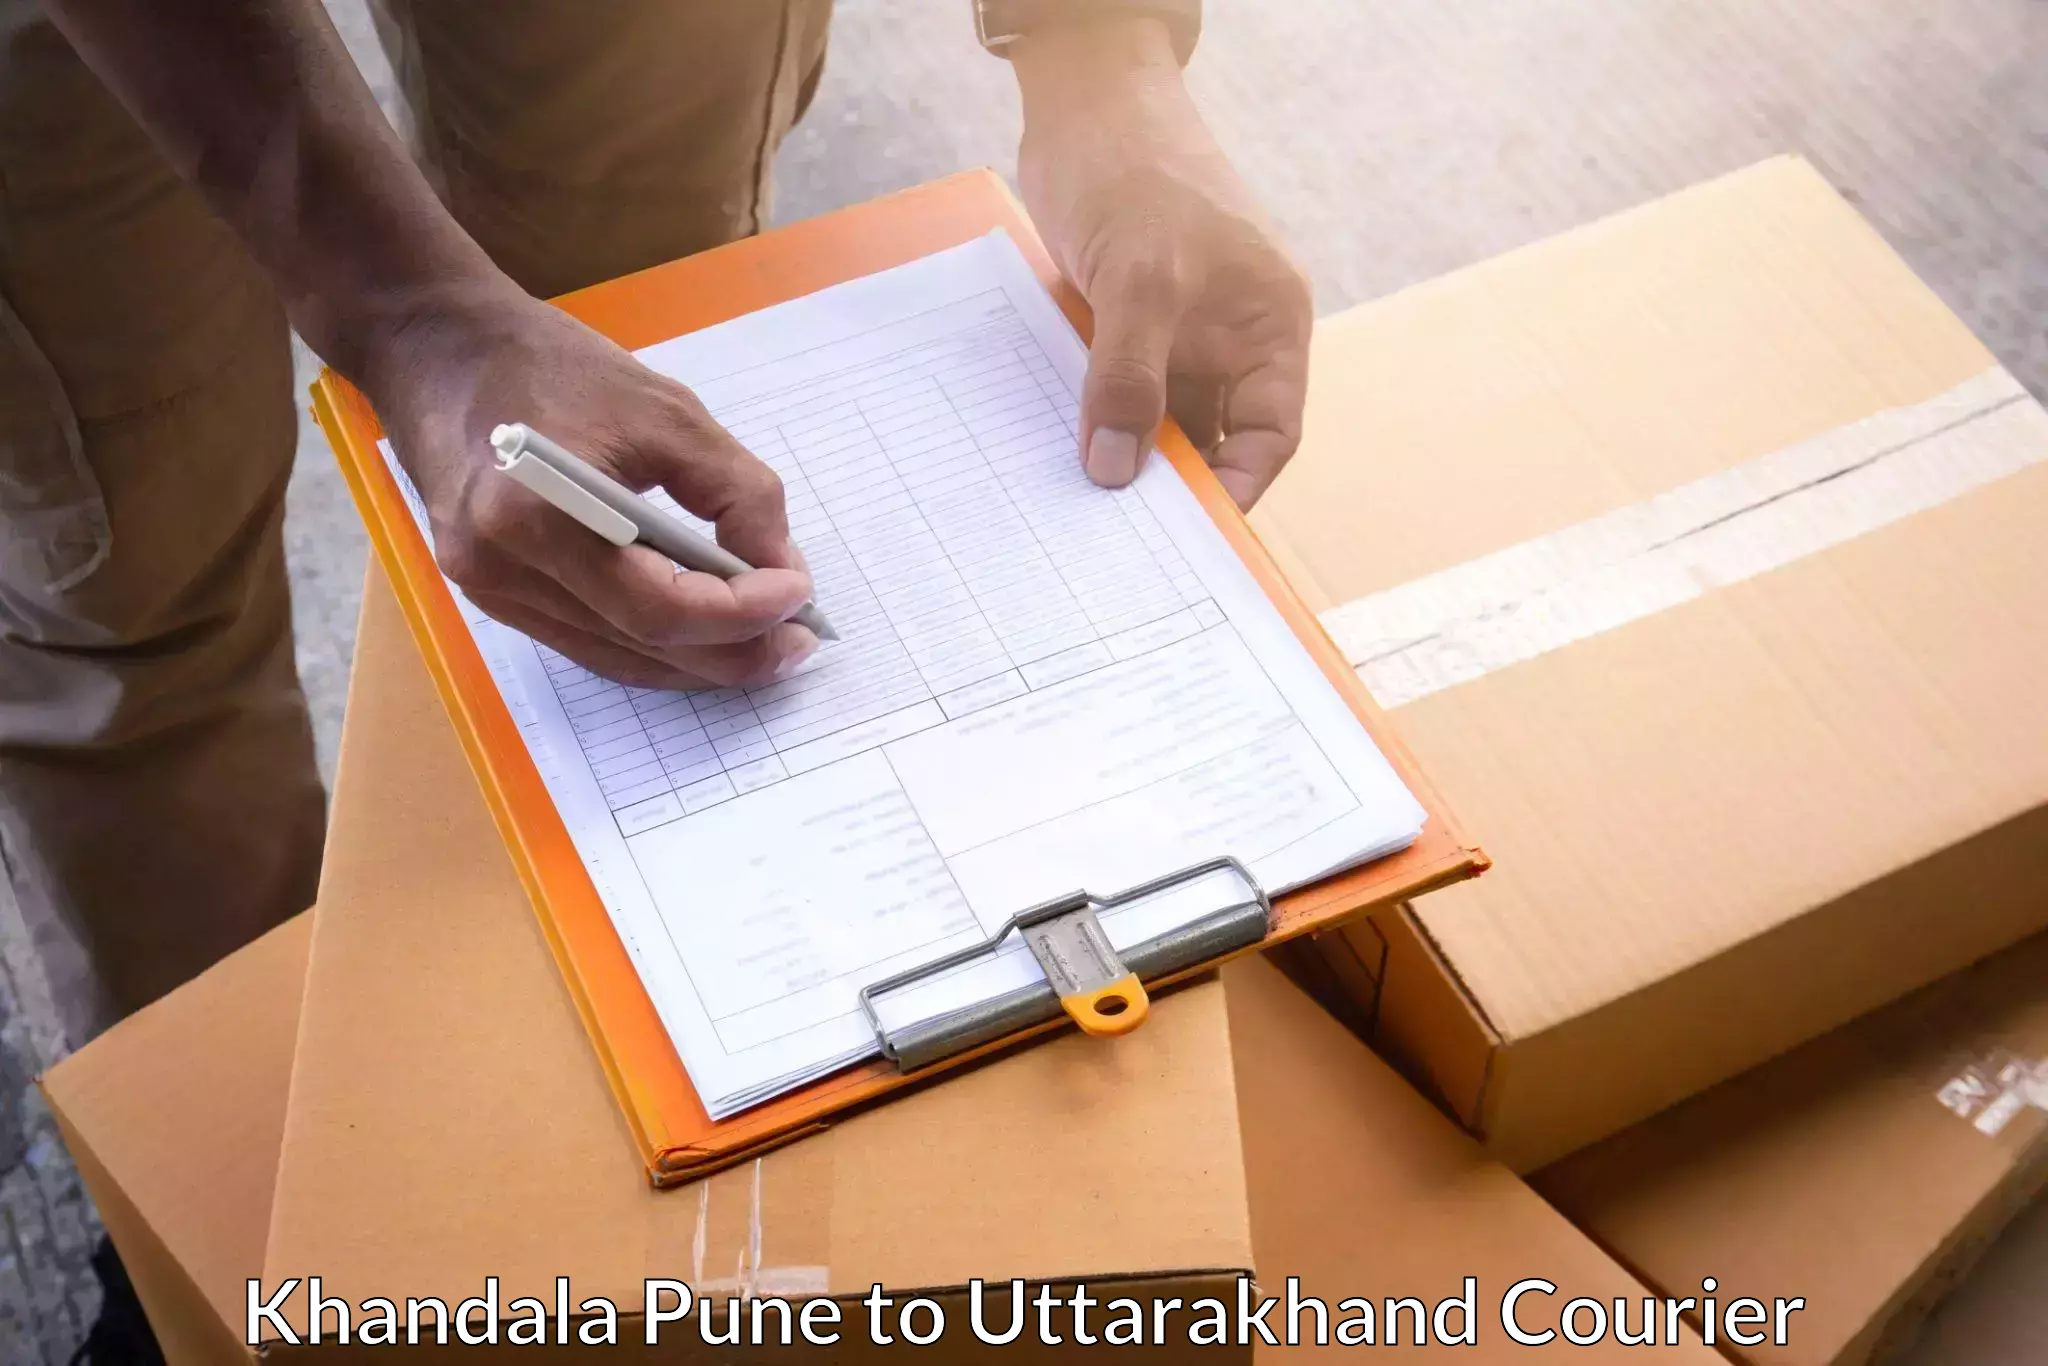 Seamless shipping experience Khandala Pune to Nainital